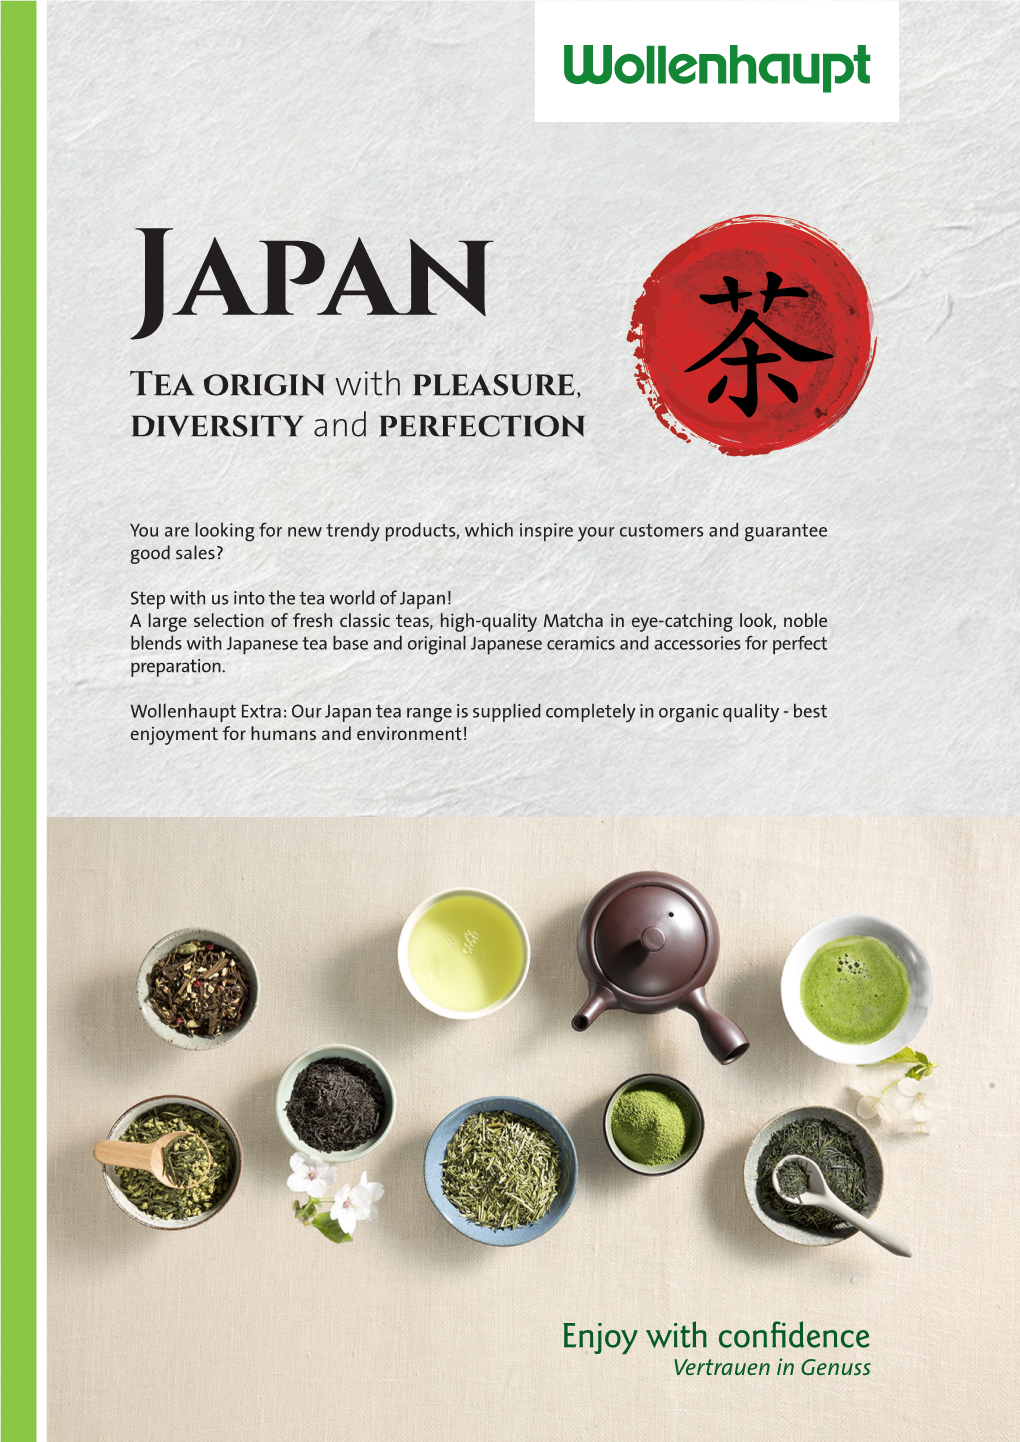 Tea Origin with Pleasure, Diversity and Perfection